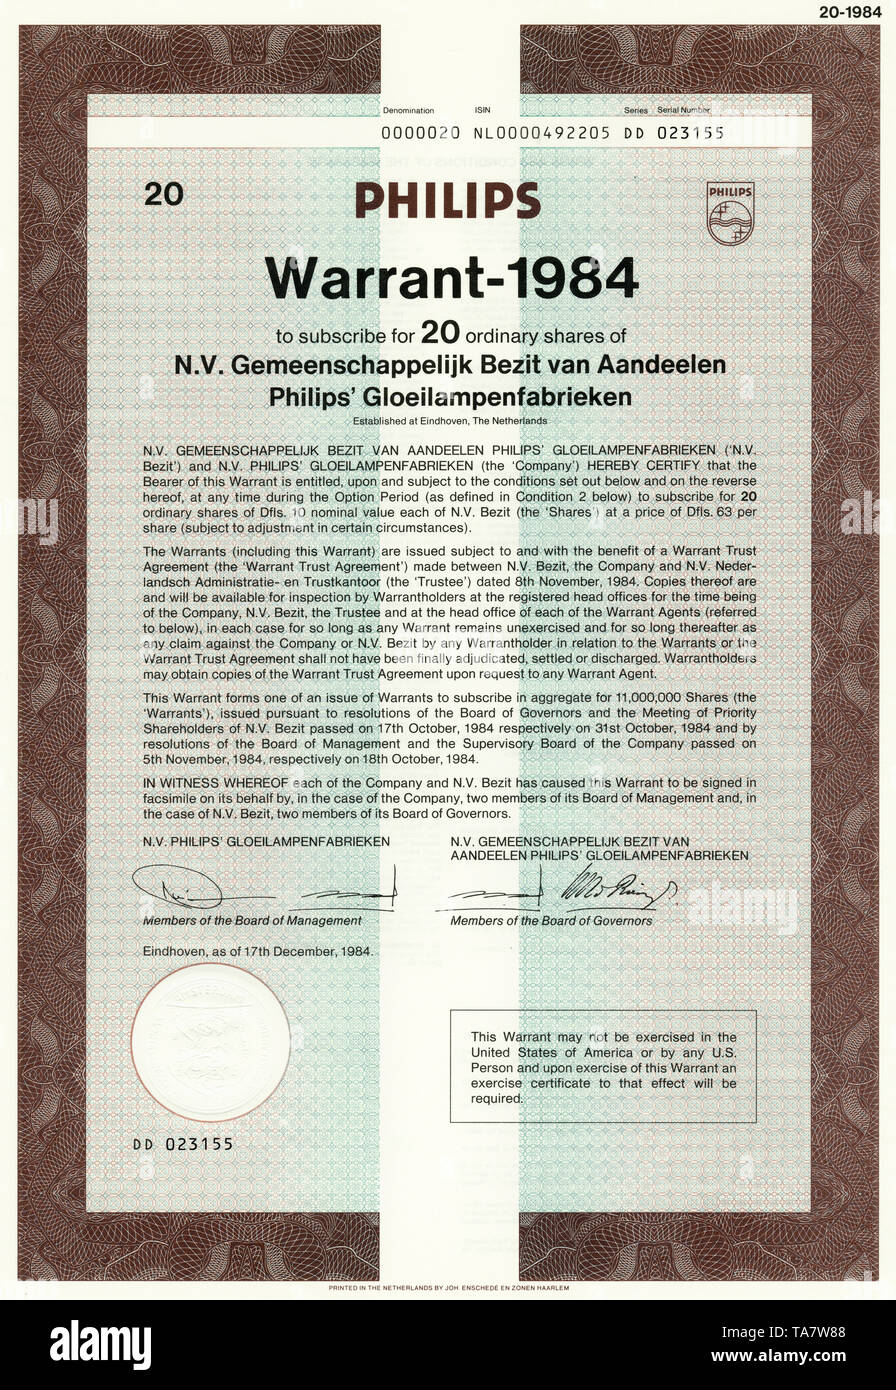 Historic Stock certificato, certificato di titoli al portatore, warrant, Inhaber-Optionsschein für Aktien DER N.V. Gemeenschppelijk Bezit van Aandeelen, Philips' Gloeilampenfabrieken, Eindhoven, 1984, Niederlande Foto Stock